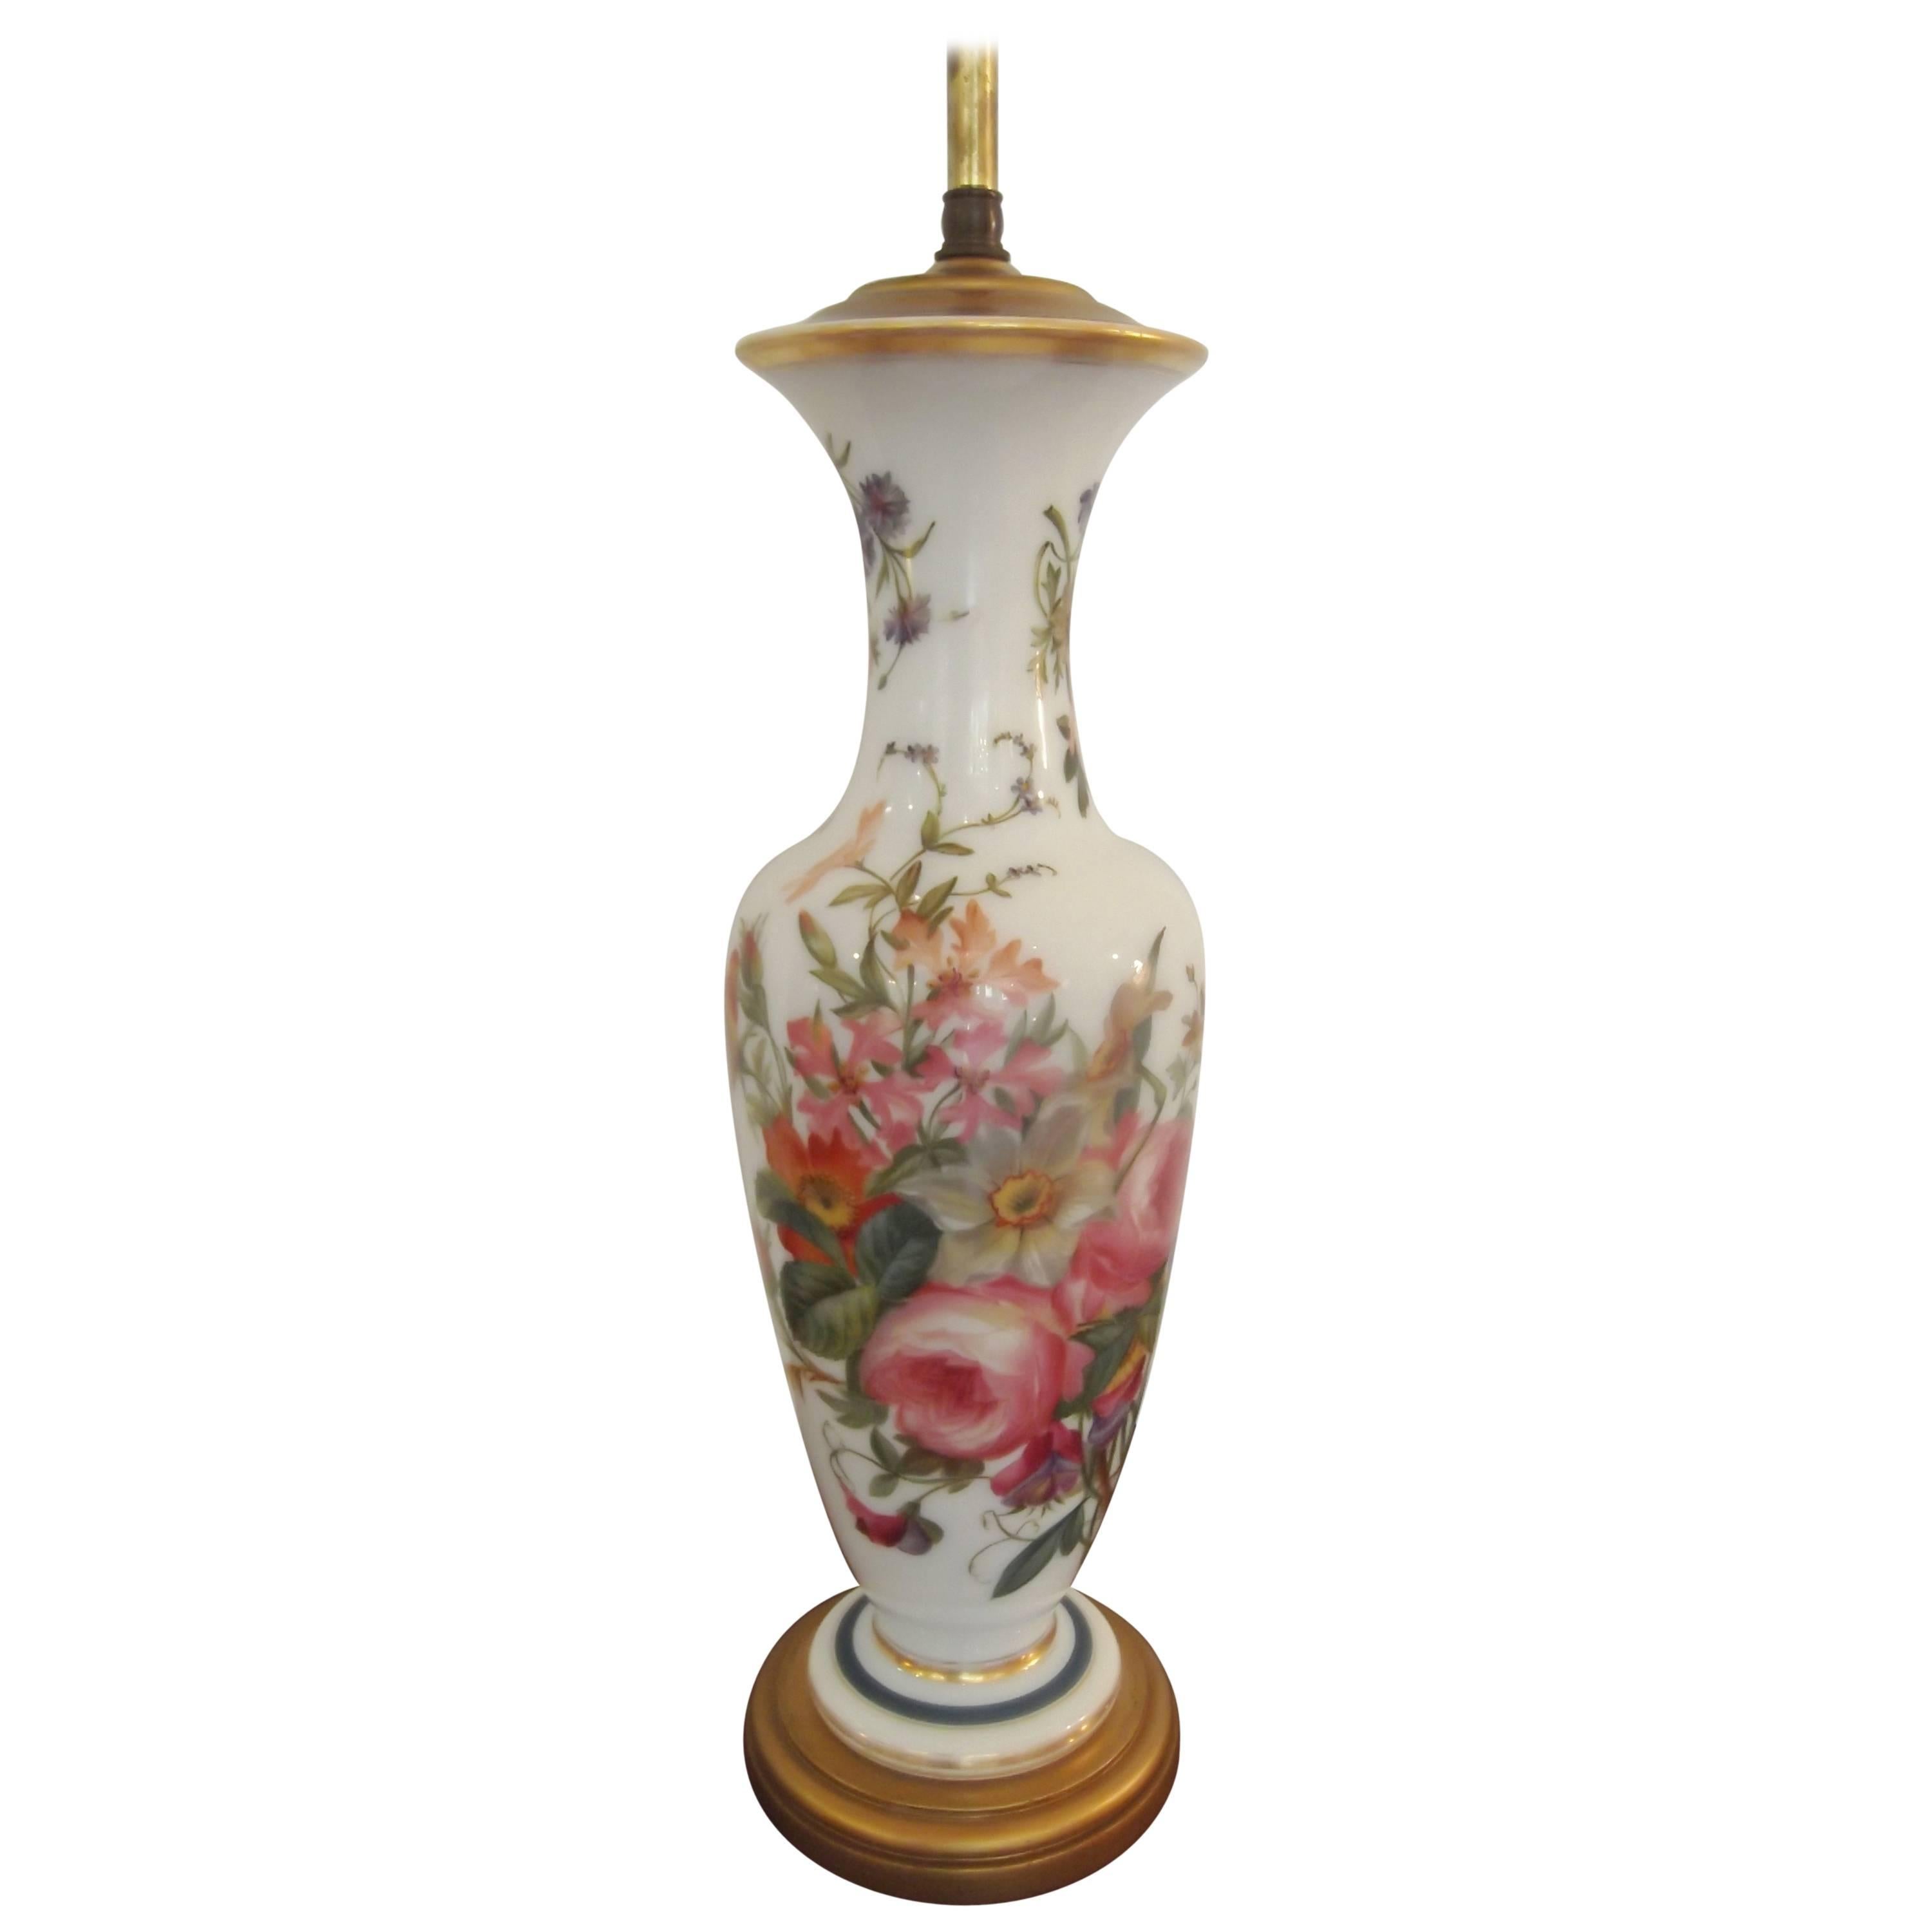 French Opaline Enamel Painted Vase Lamp by Jean-Francois Robert, Baccarat 1840